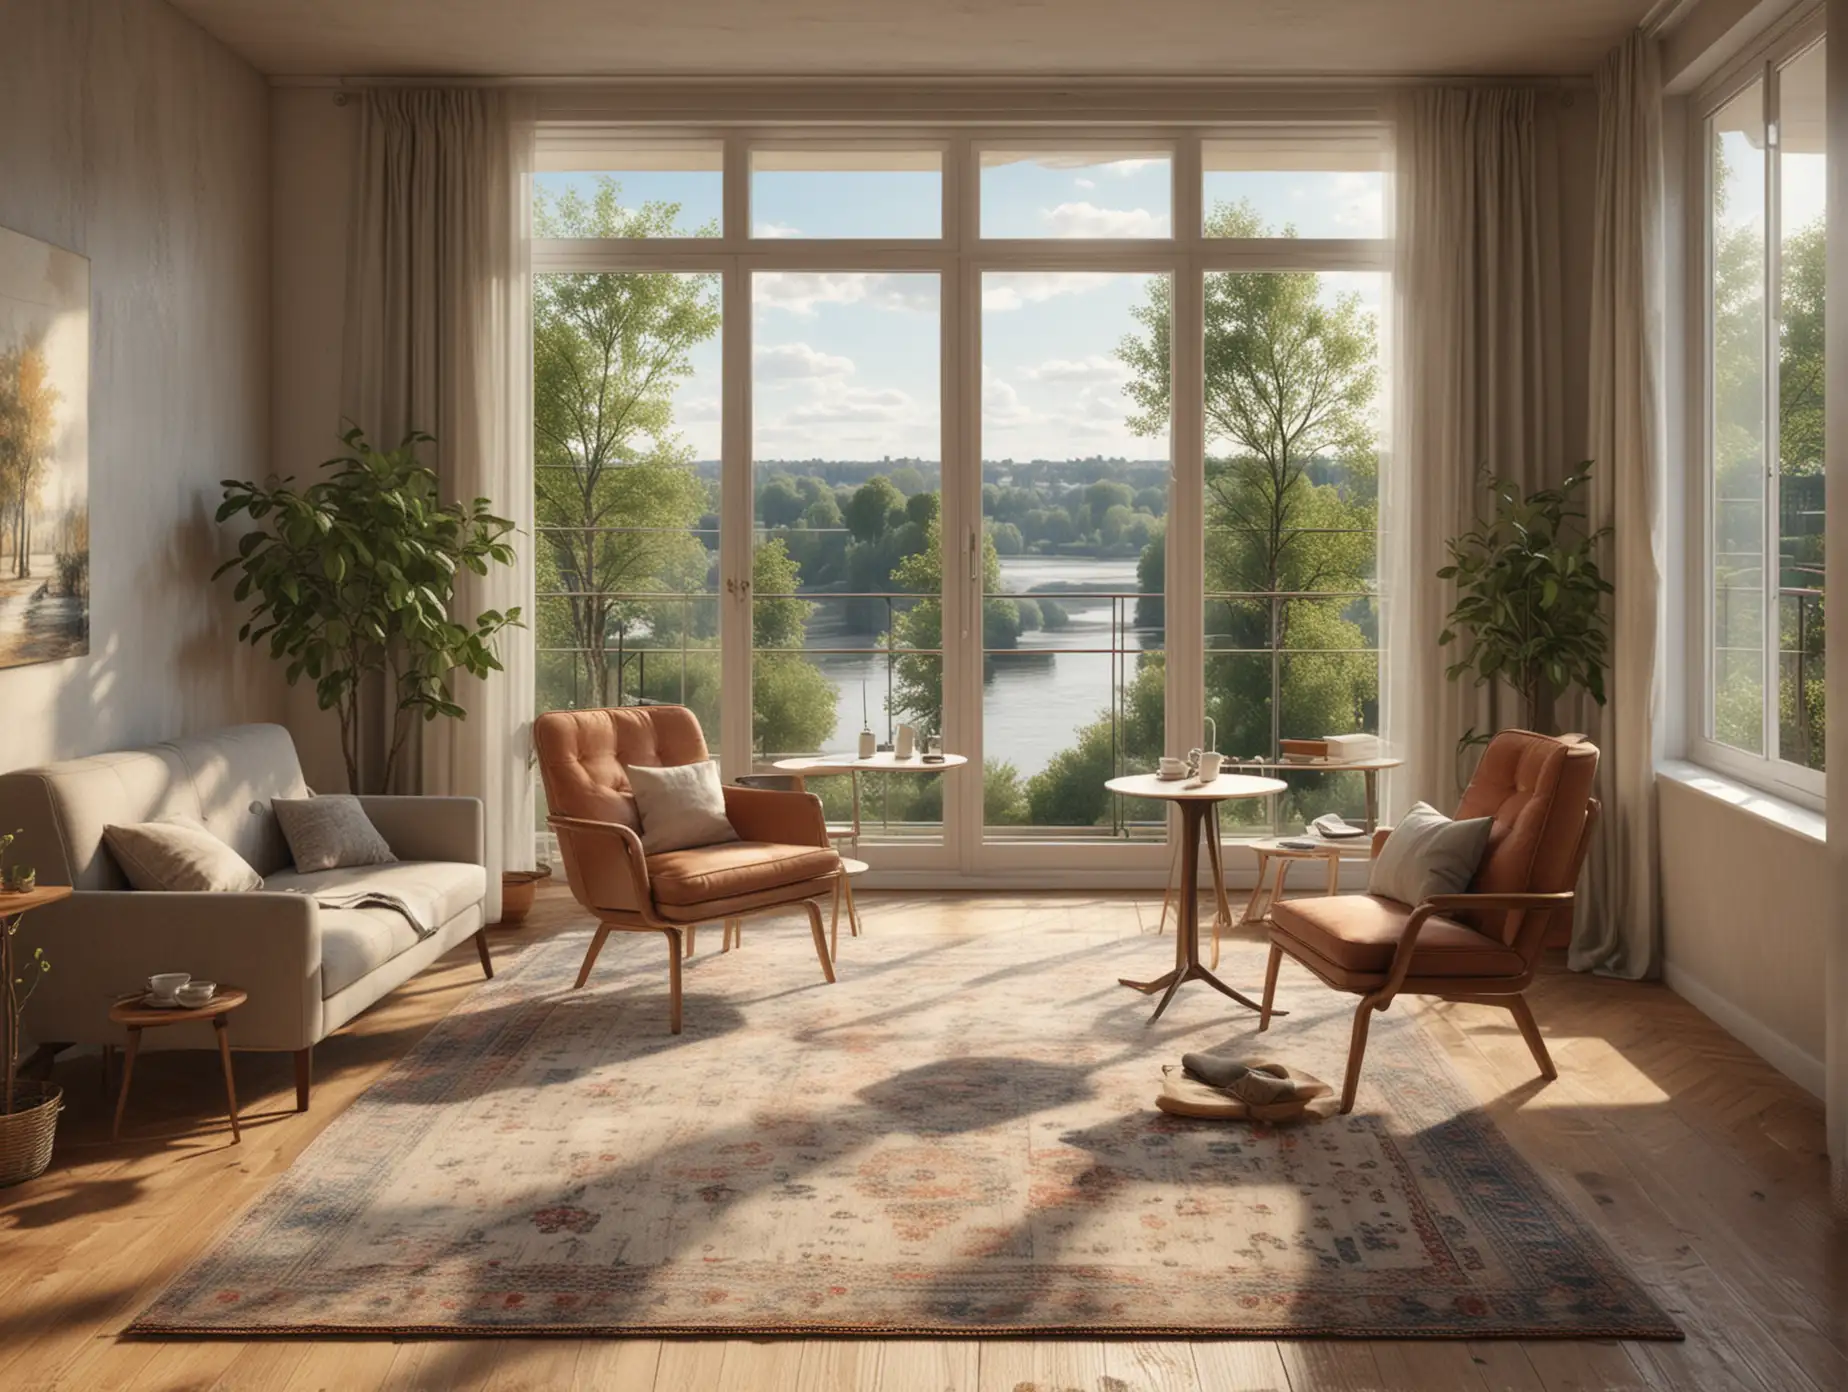 Modern-Interior-Scene-Girl-Enjoying-Tea-by-Sunlit-Window-Overlooking-River